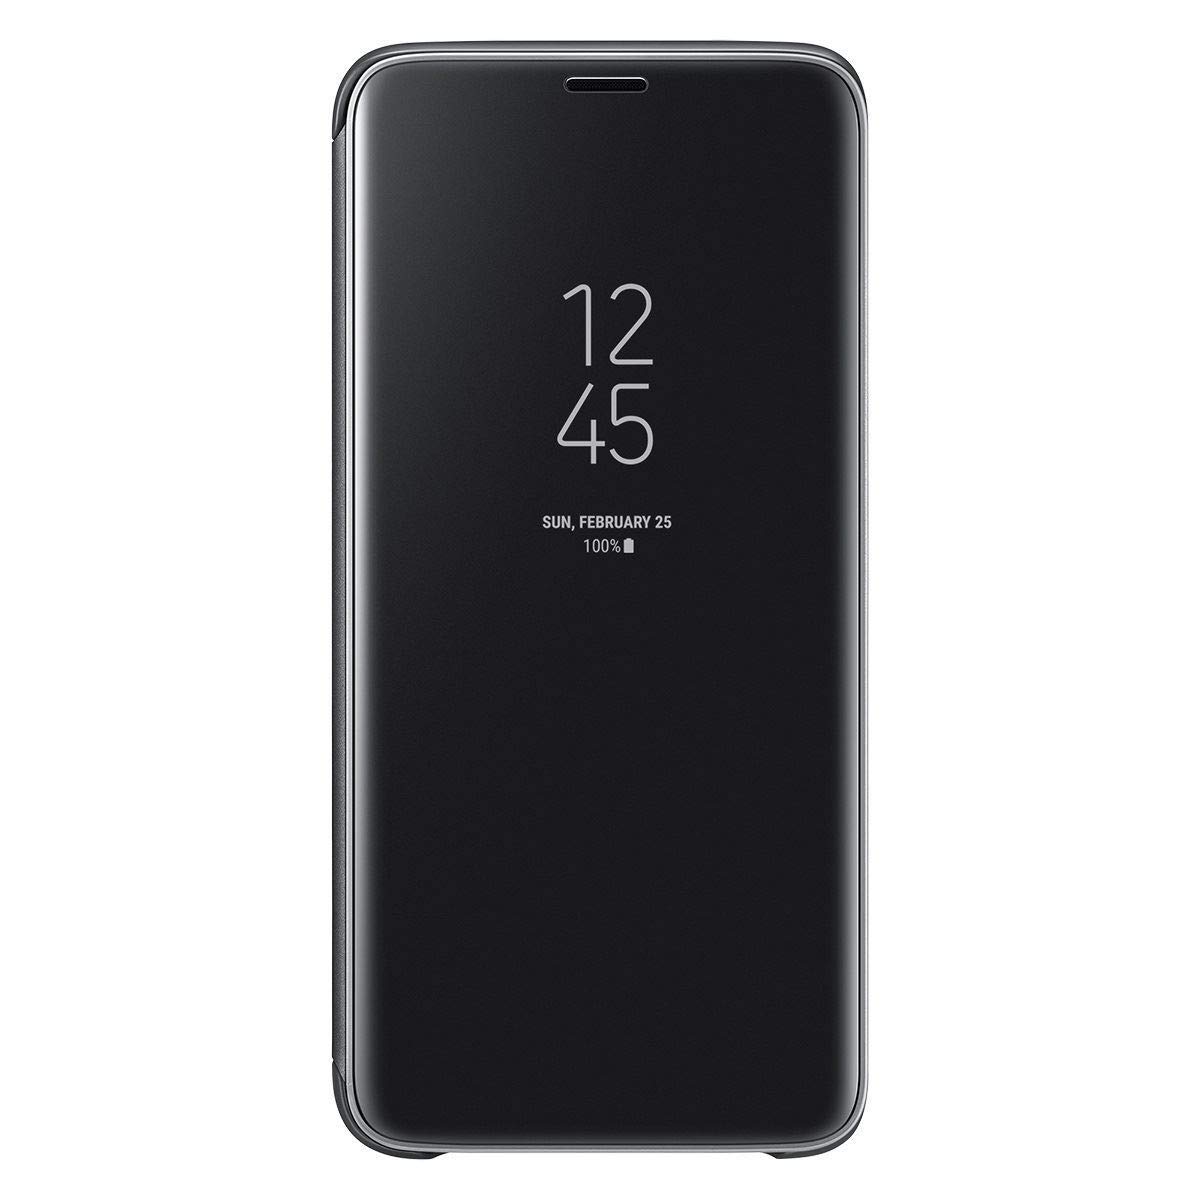 Samsung Galaxy S9 - Clear View Standing Cover EF-ZG960, Polycarbonat, Kratzfest, Black - 5.8 Zoll